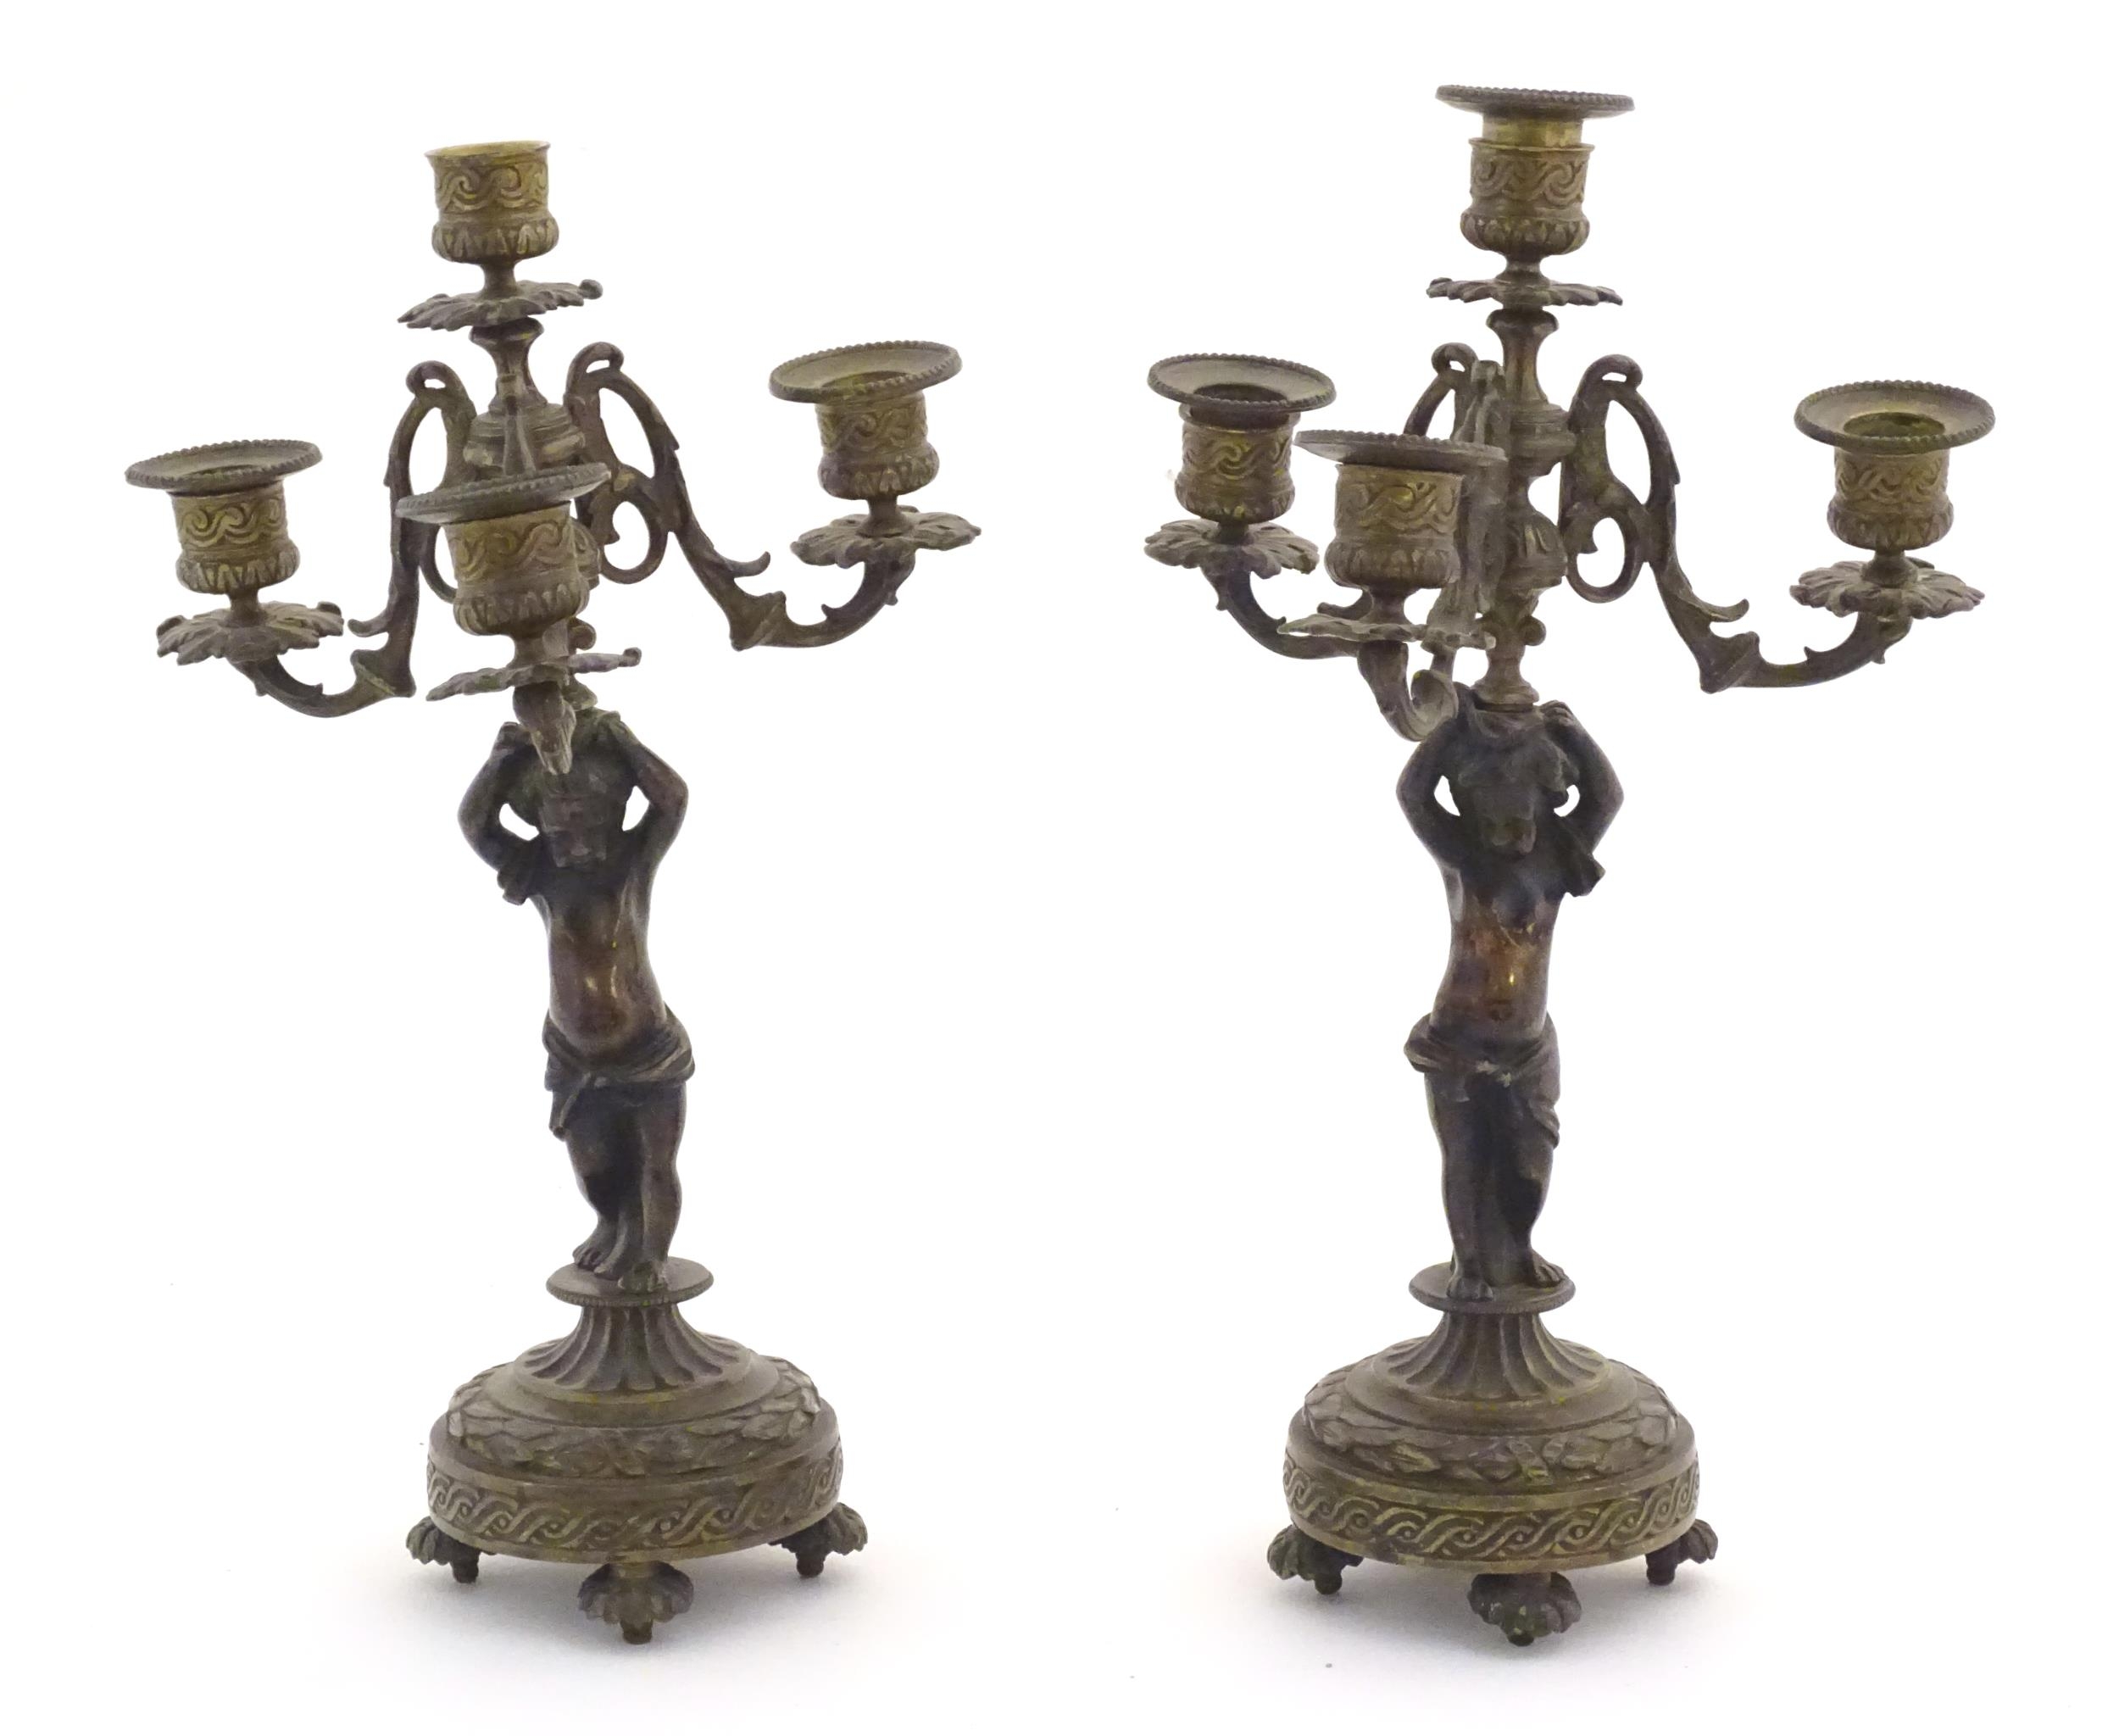 Two 19thC cast metal table candelabra / candelabrum the central bronze columns form as cherubs